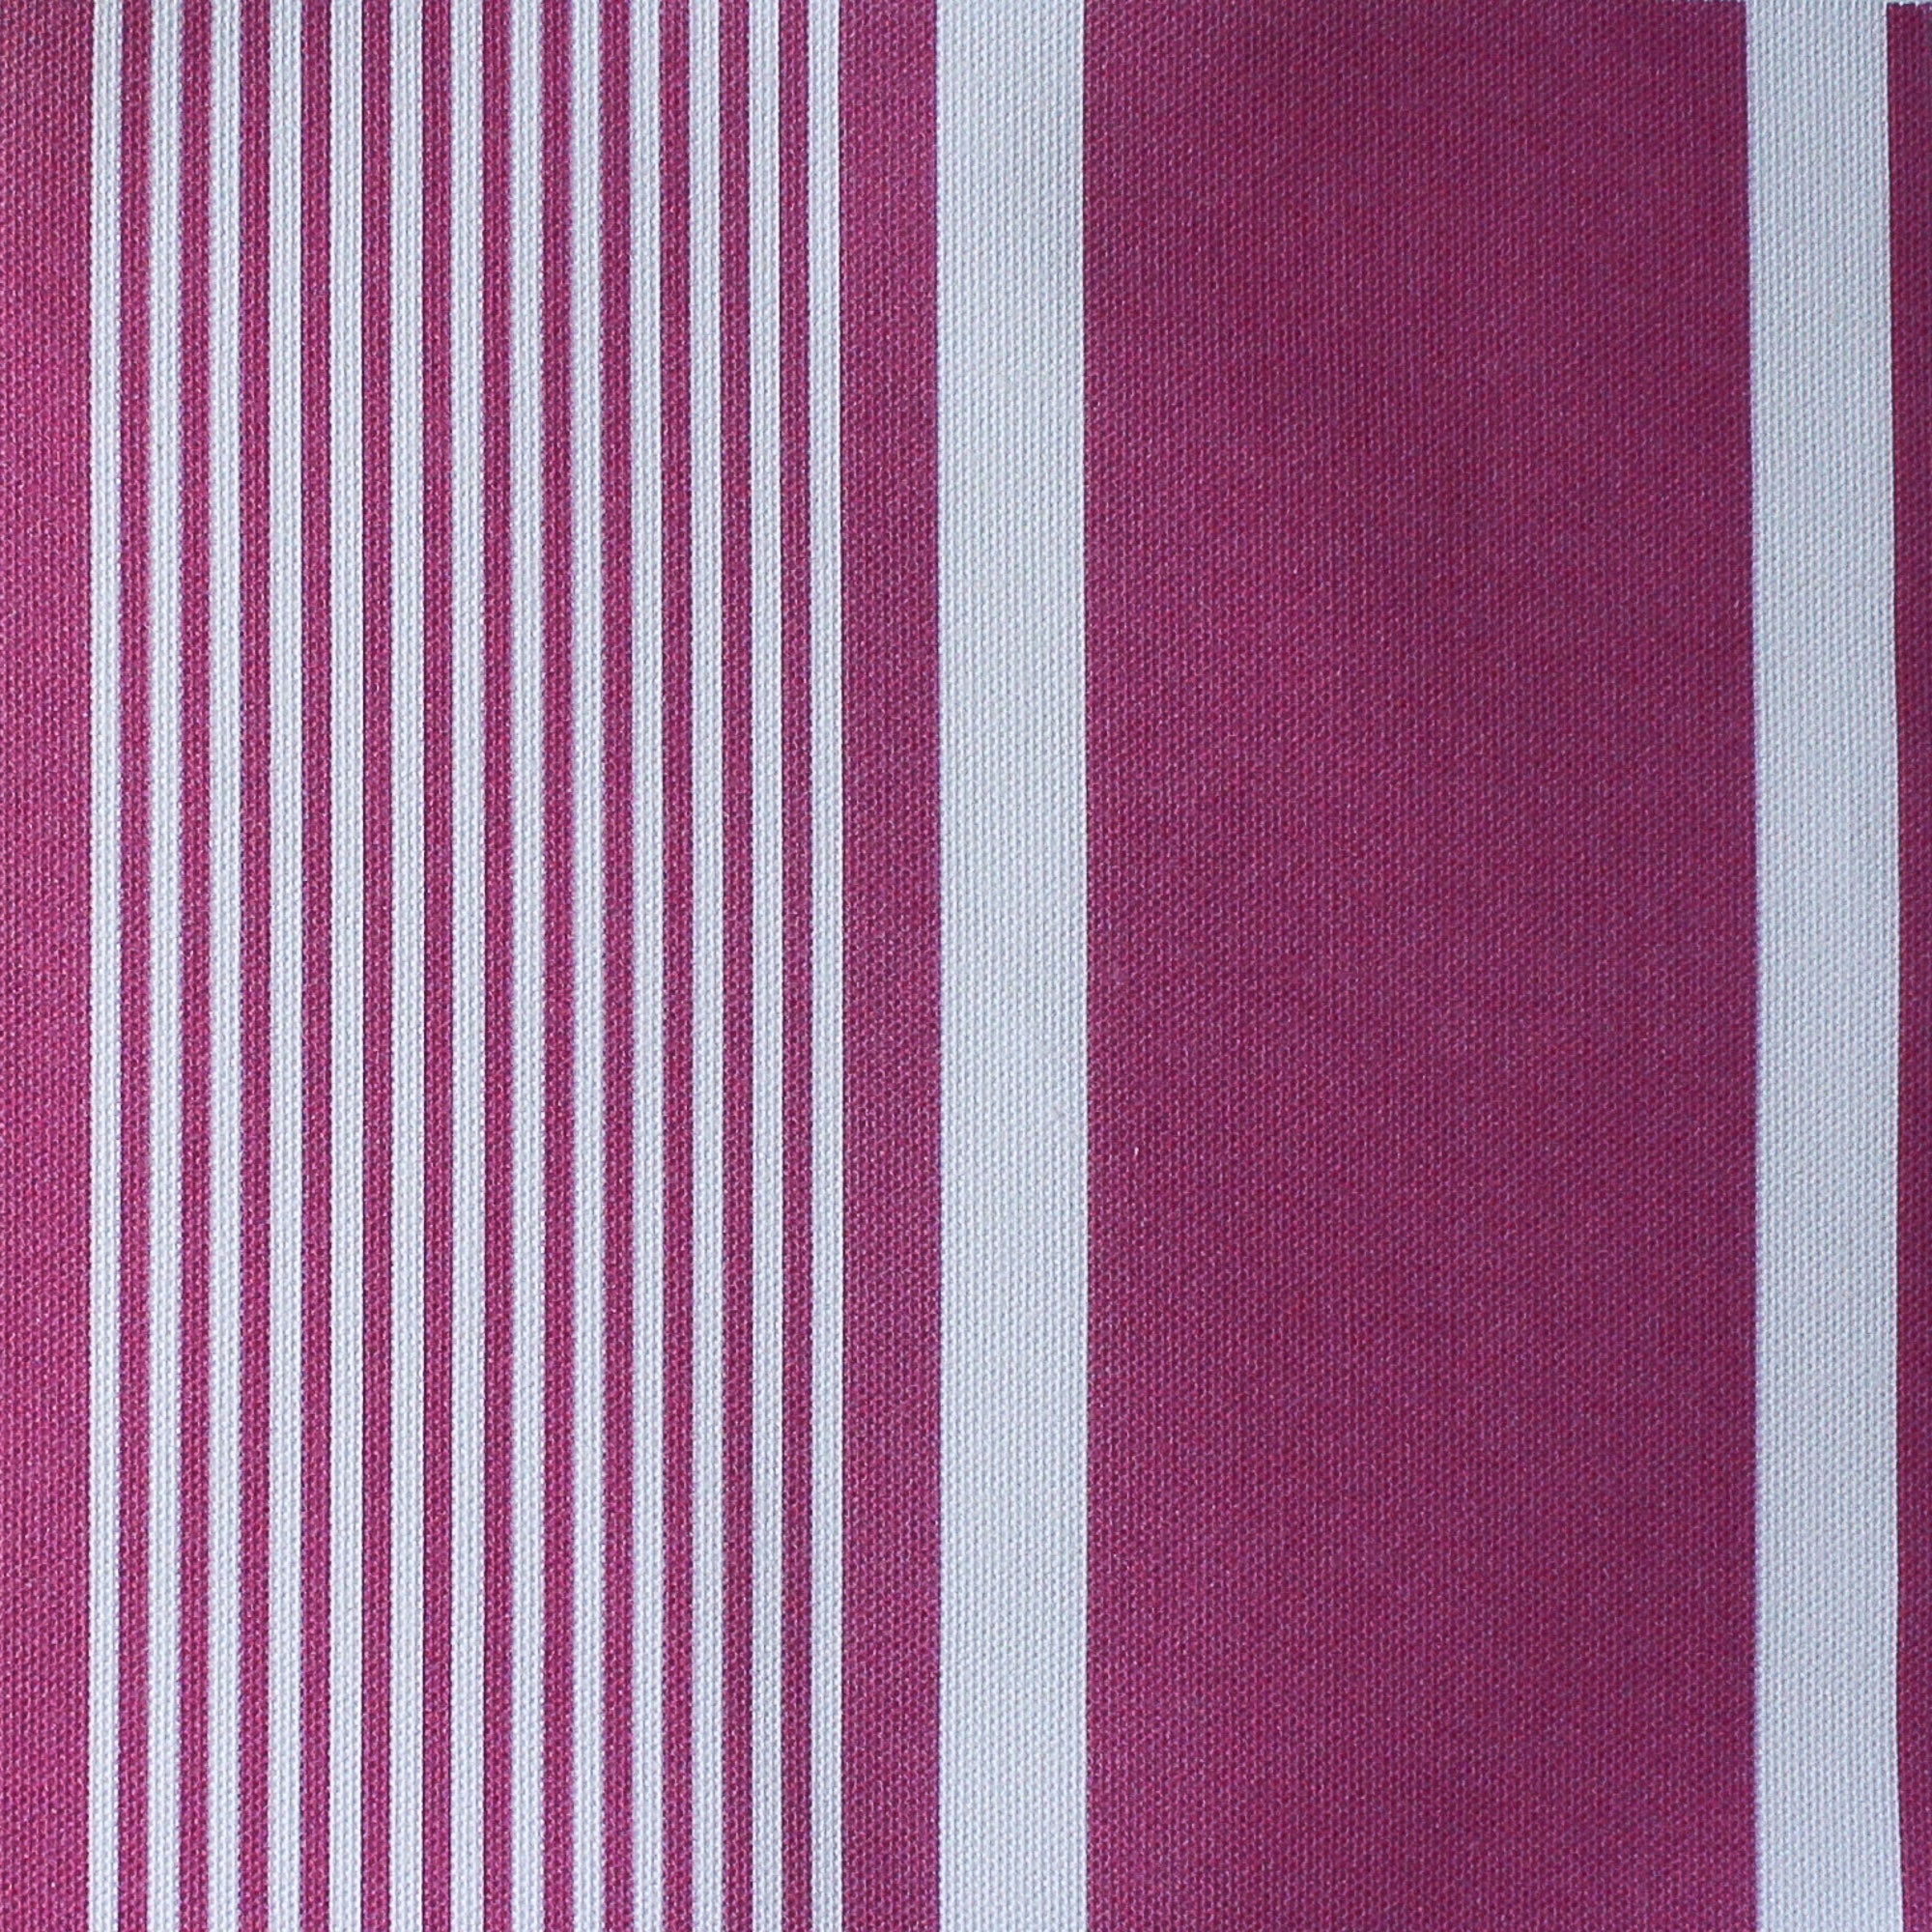 Deckchair Stripe Fabric - Raspberry - Hydrangea Lane Home